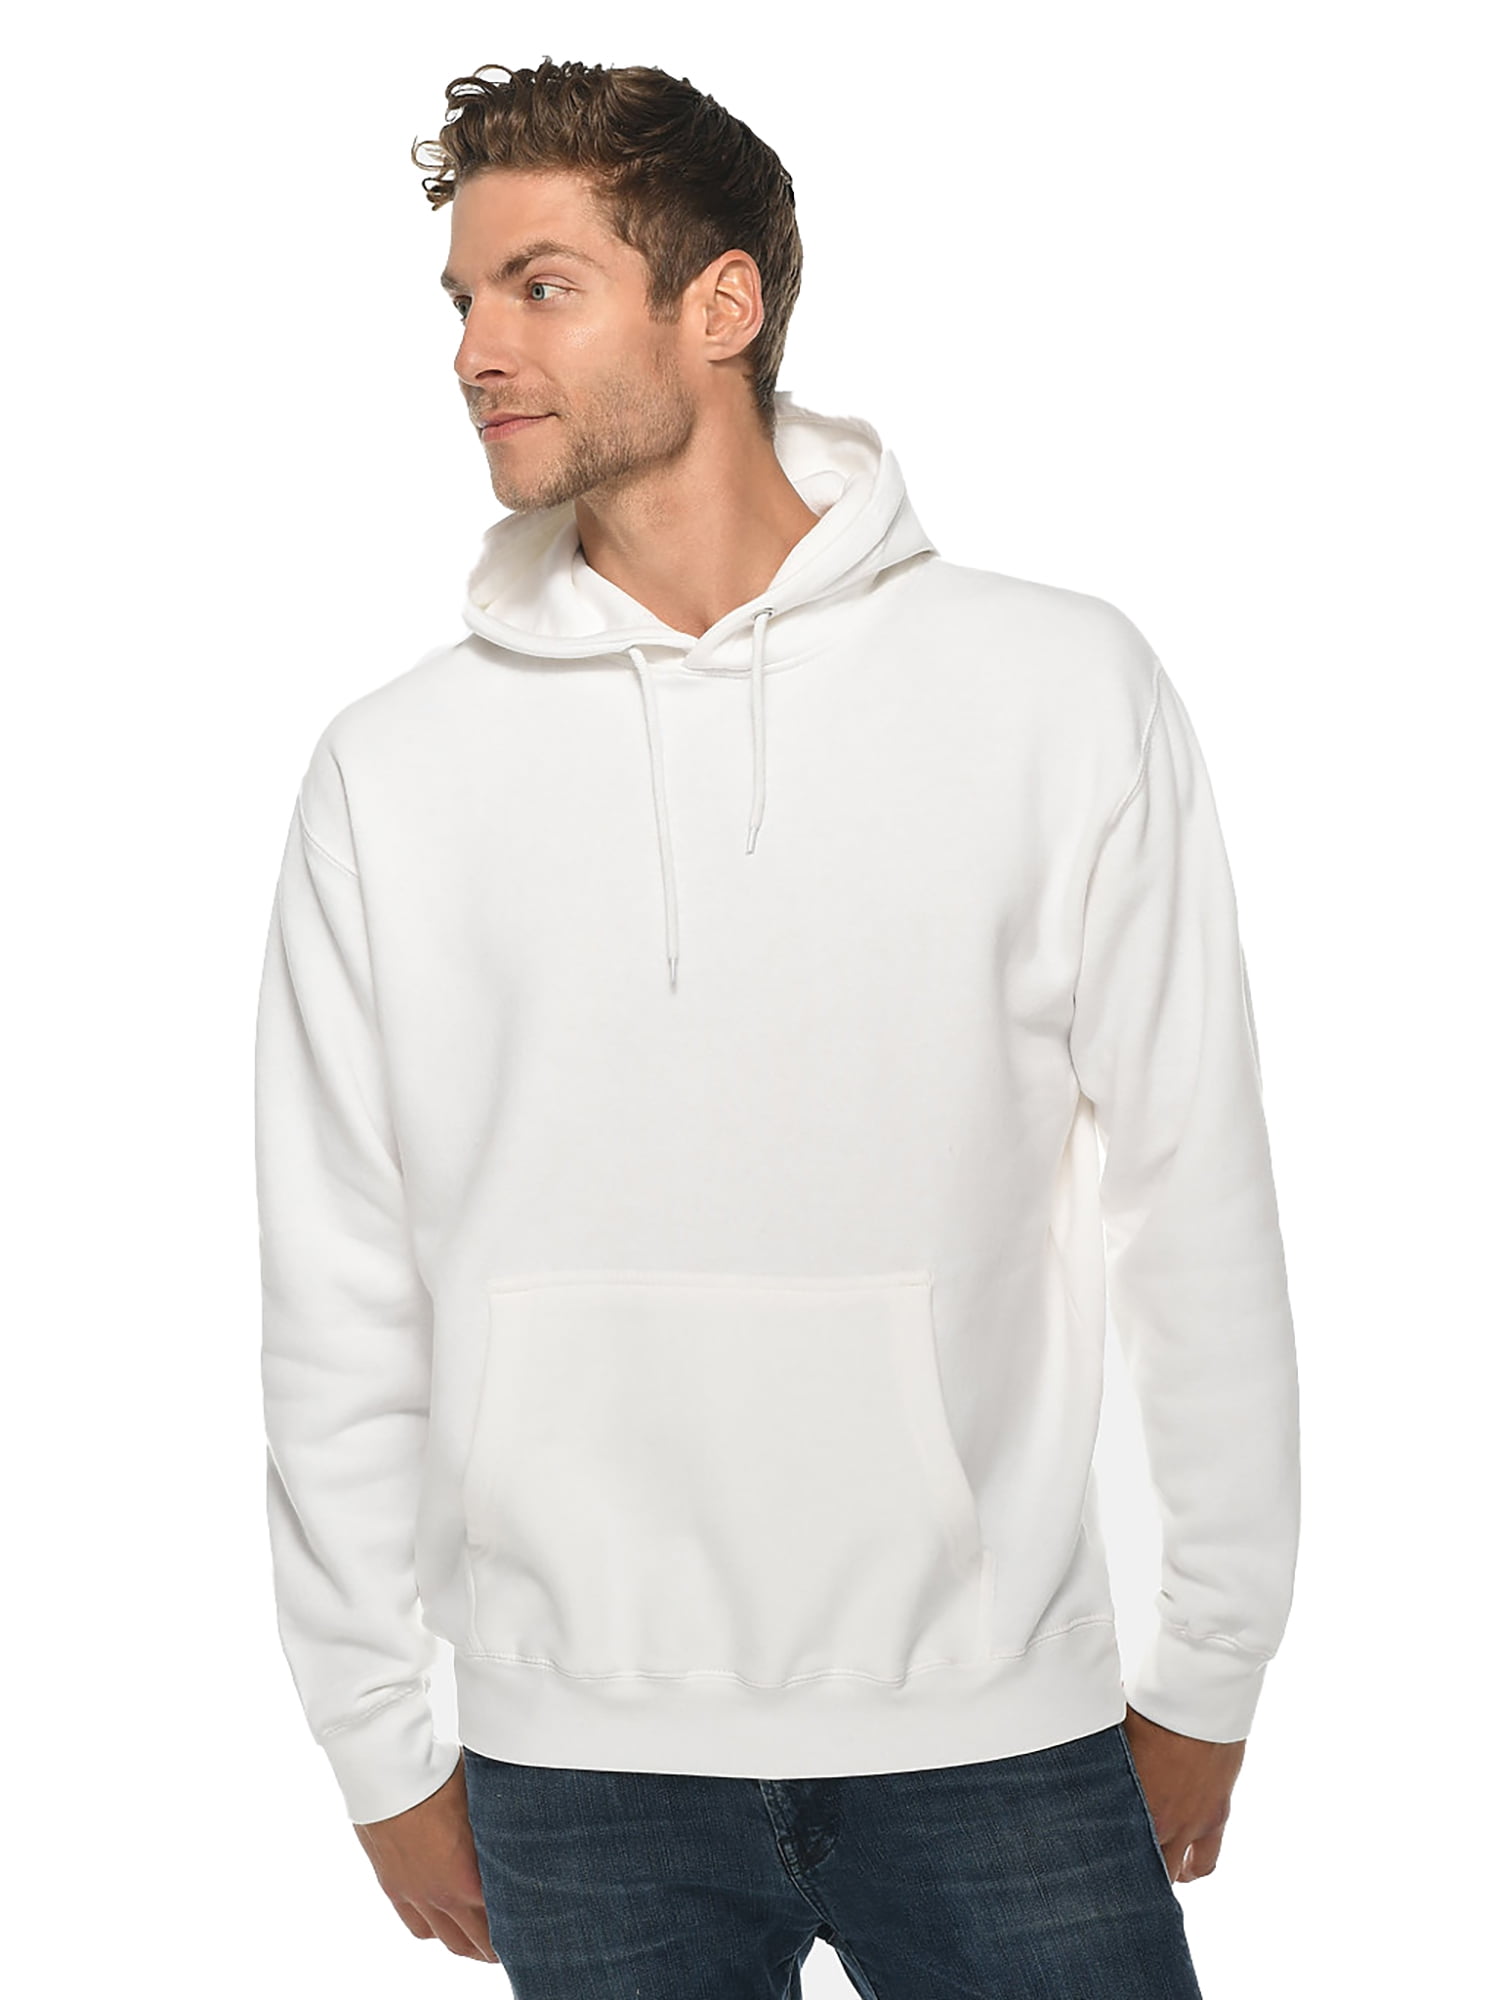 White Hoodie White Sweatshirt Hoodies for Men Hoody for Women Unisex ...